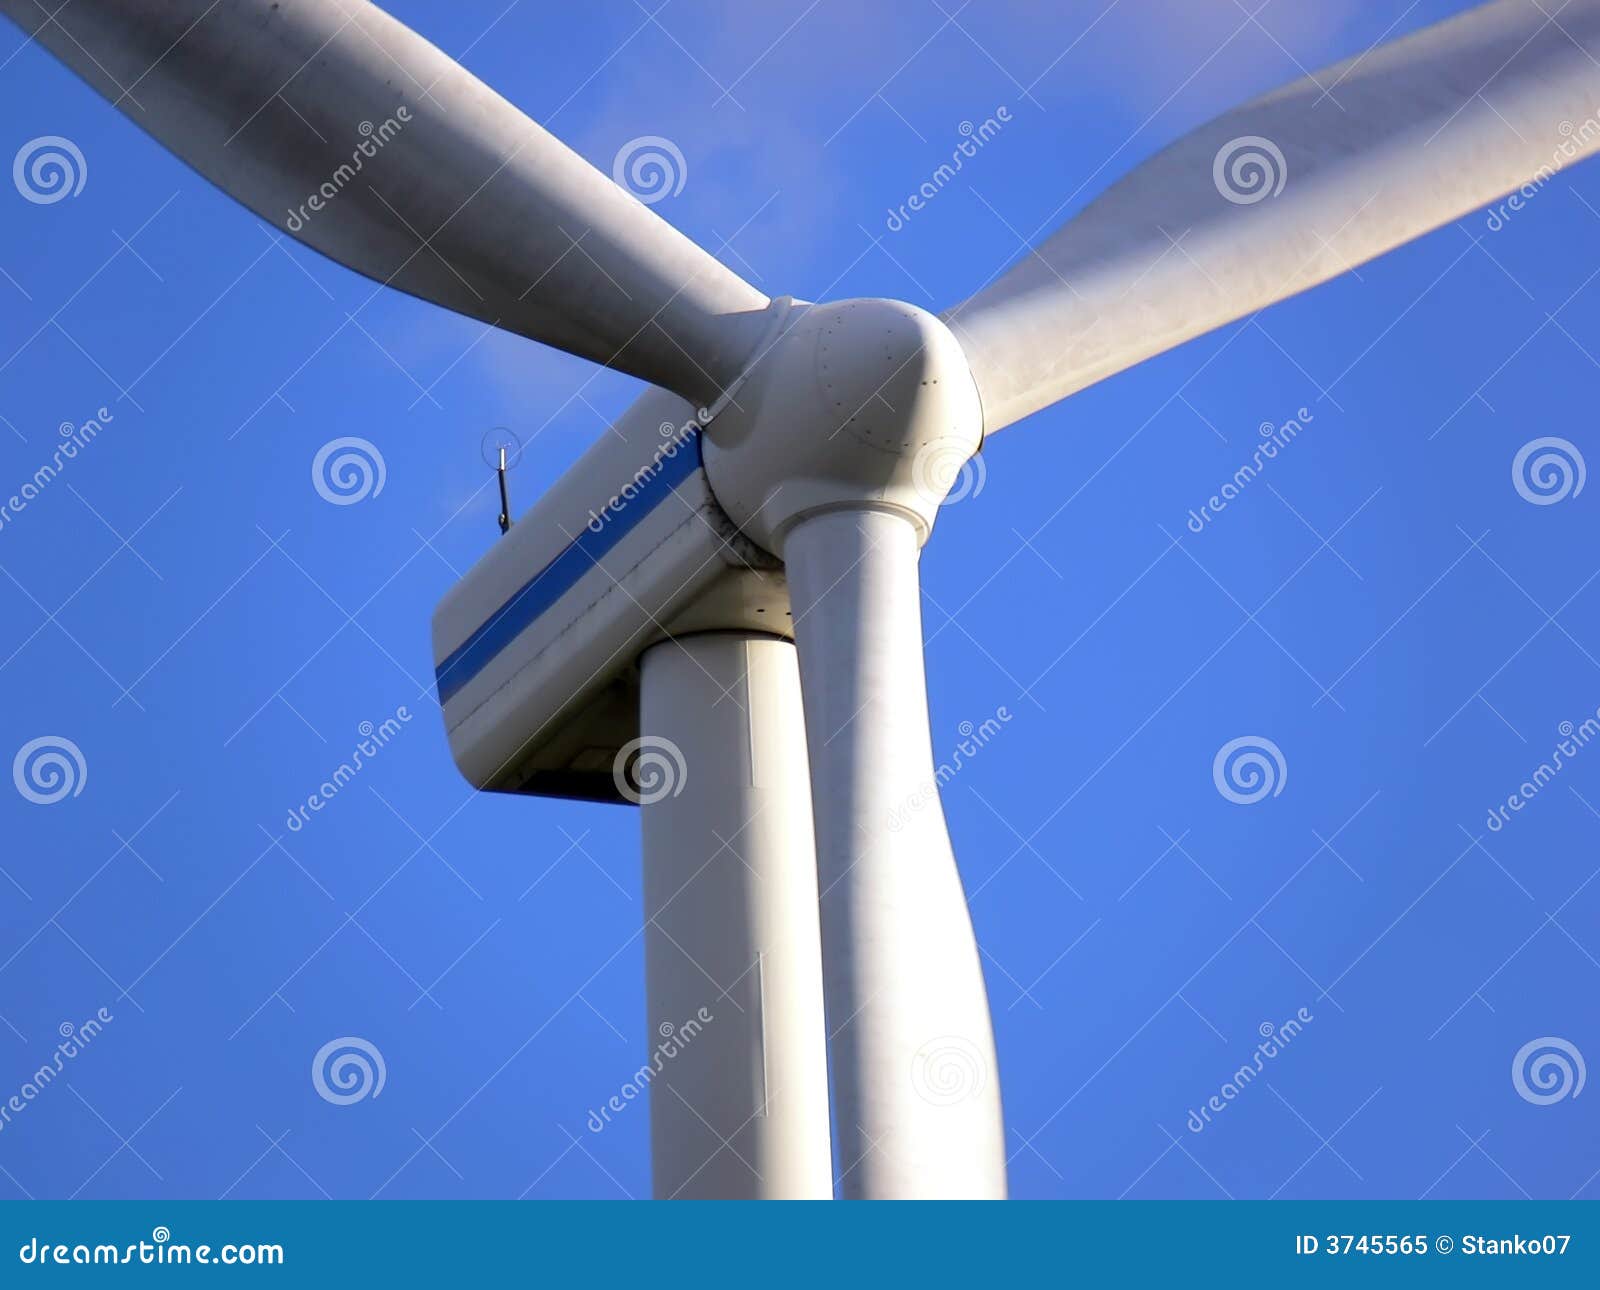 windmill close up